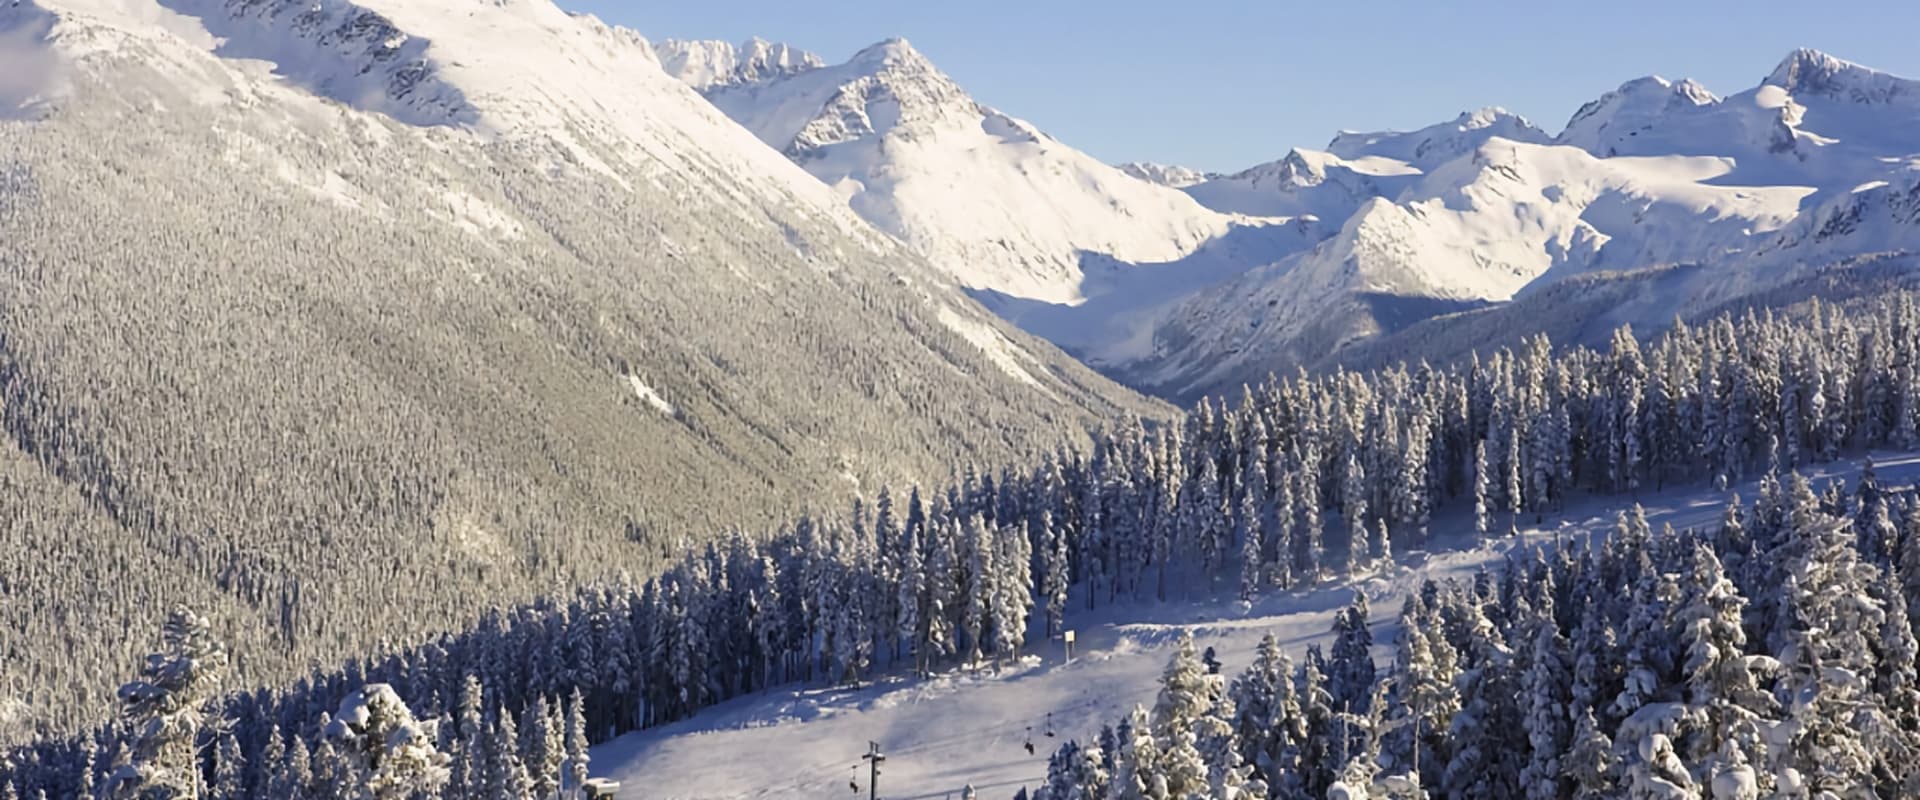 British Columbia: Canada's Olympic Wilderness